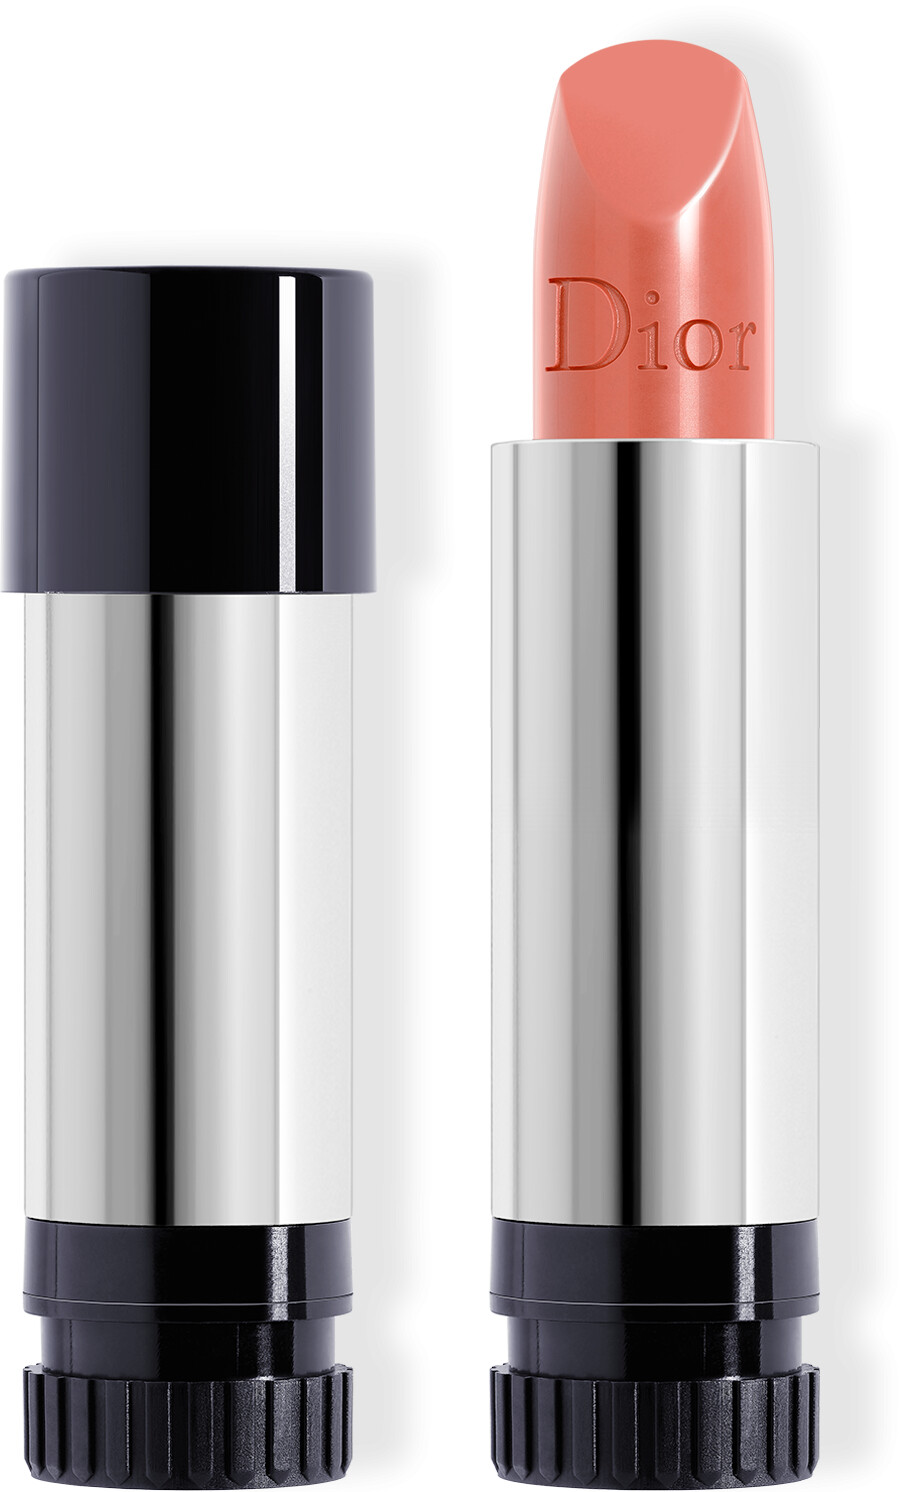 DIOR Rouge Dior Coloured Lip Balm Refill 3.5g 525 - Cherie - Satin